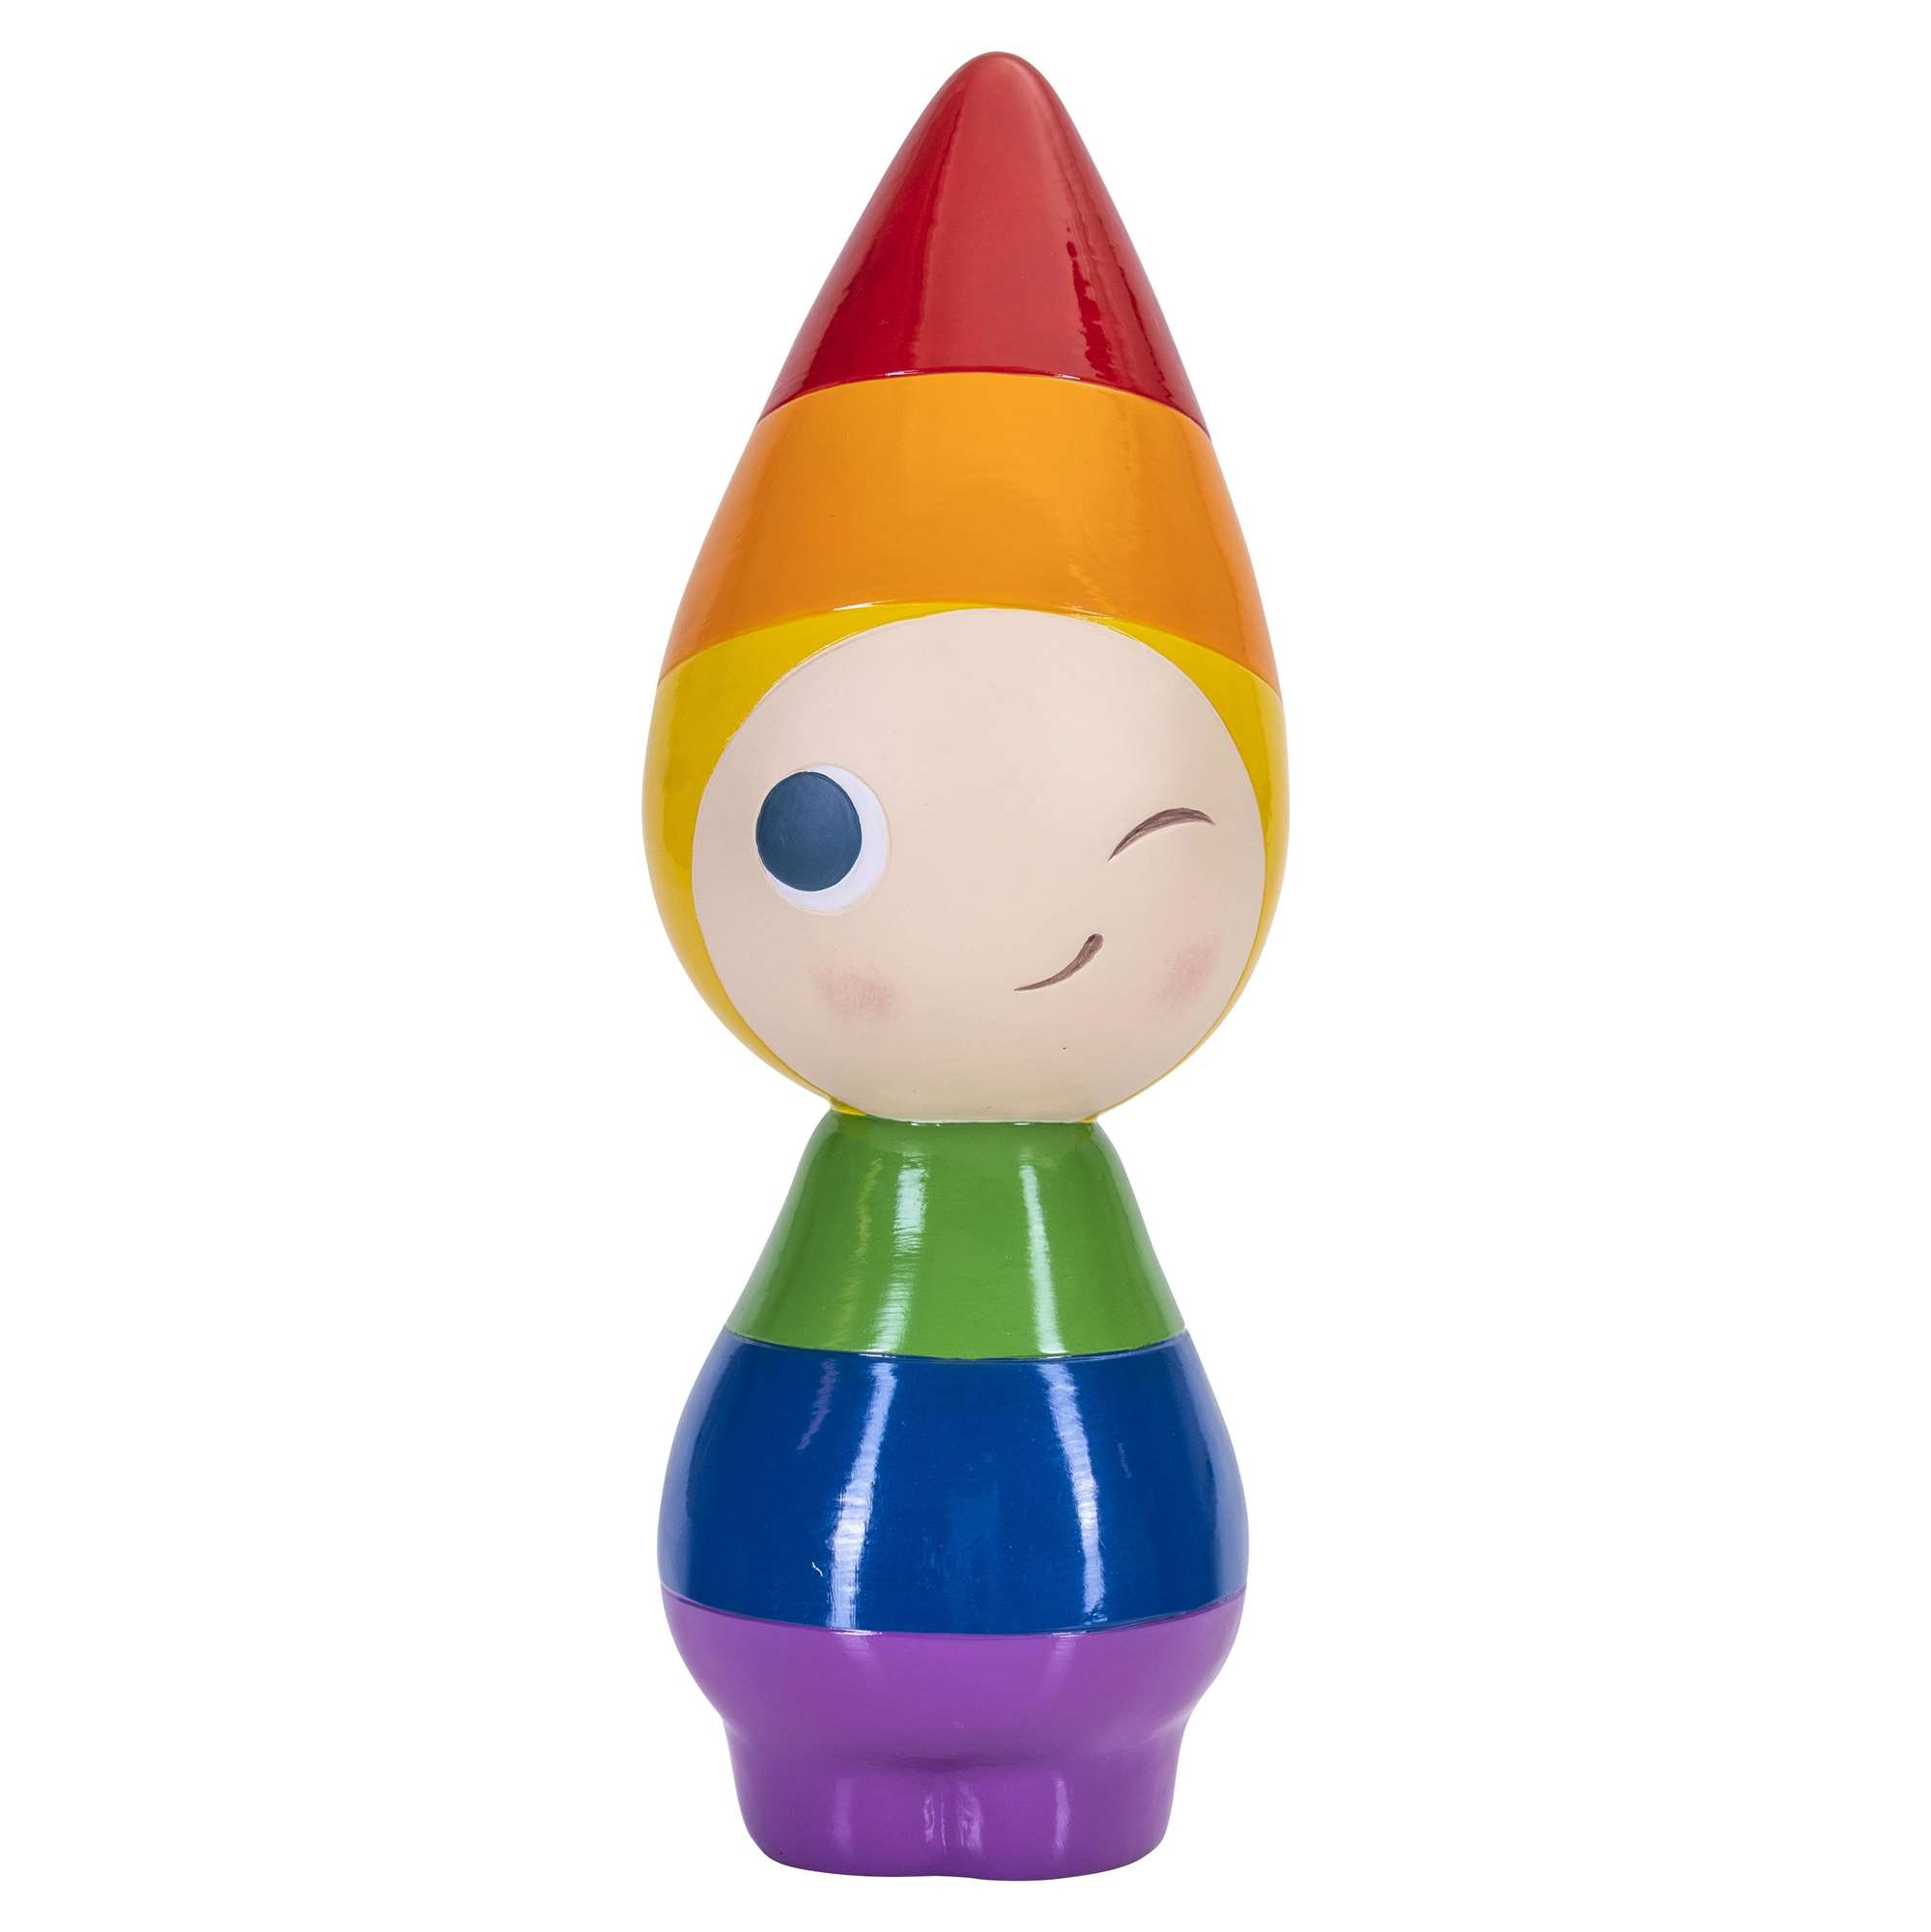 Peggy winking, rainbow H.25cm